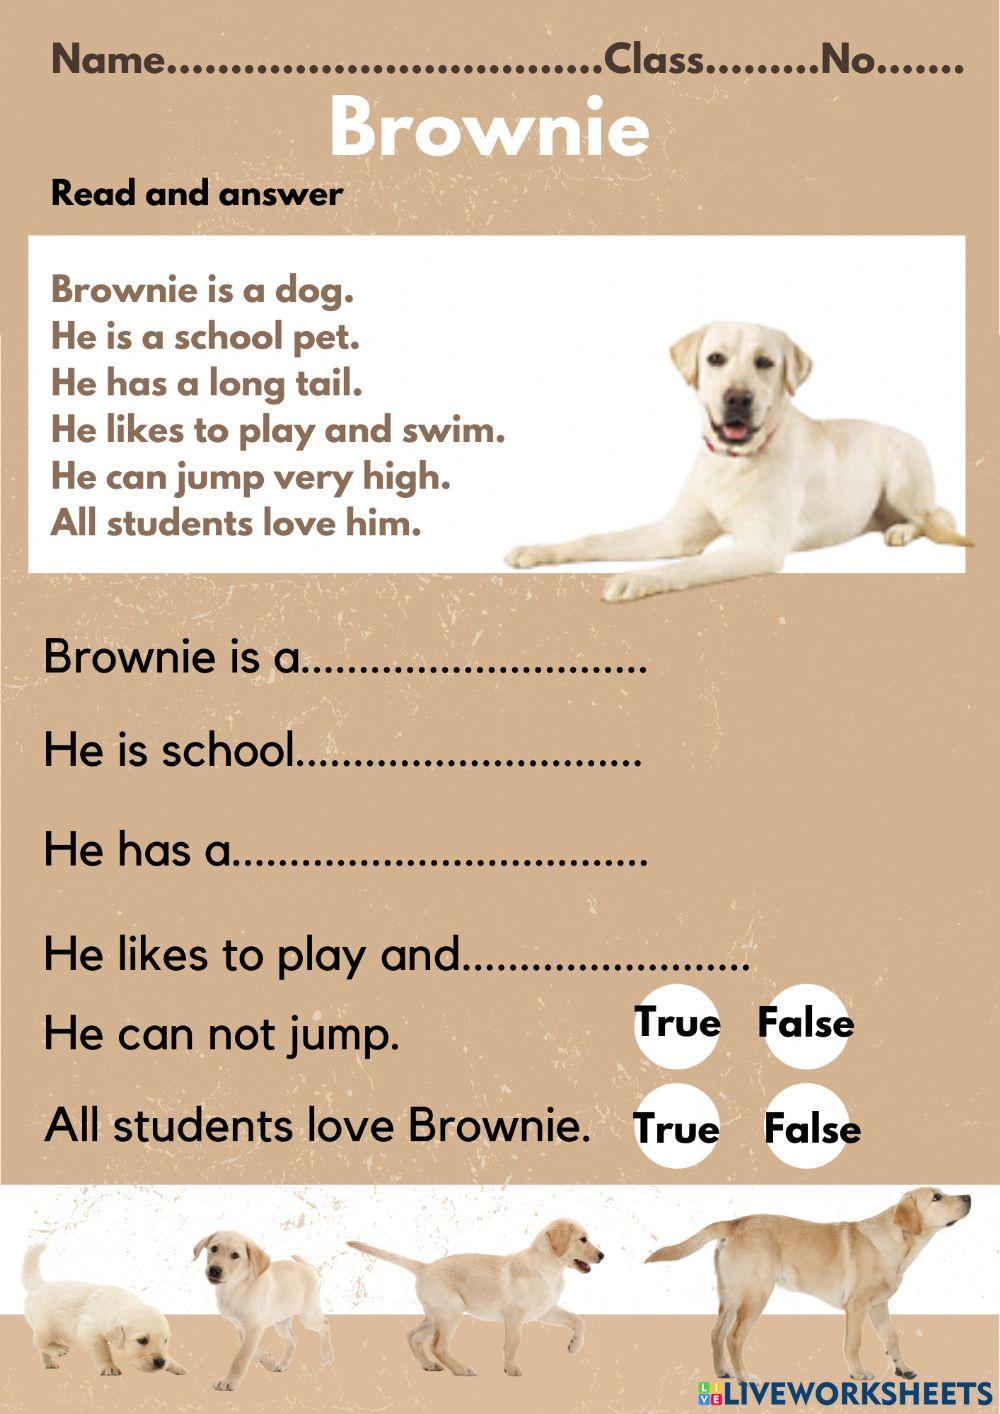 Brownie a dog